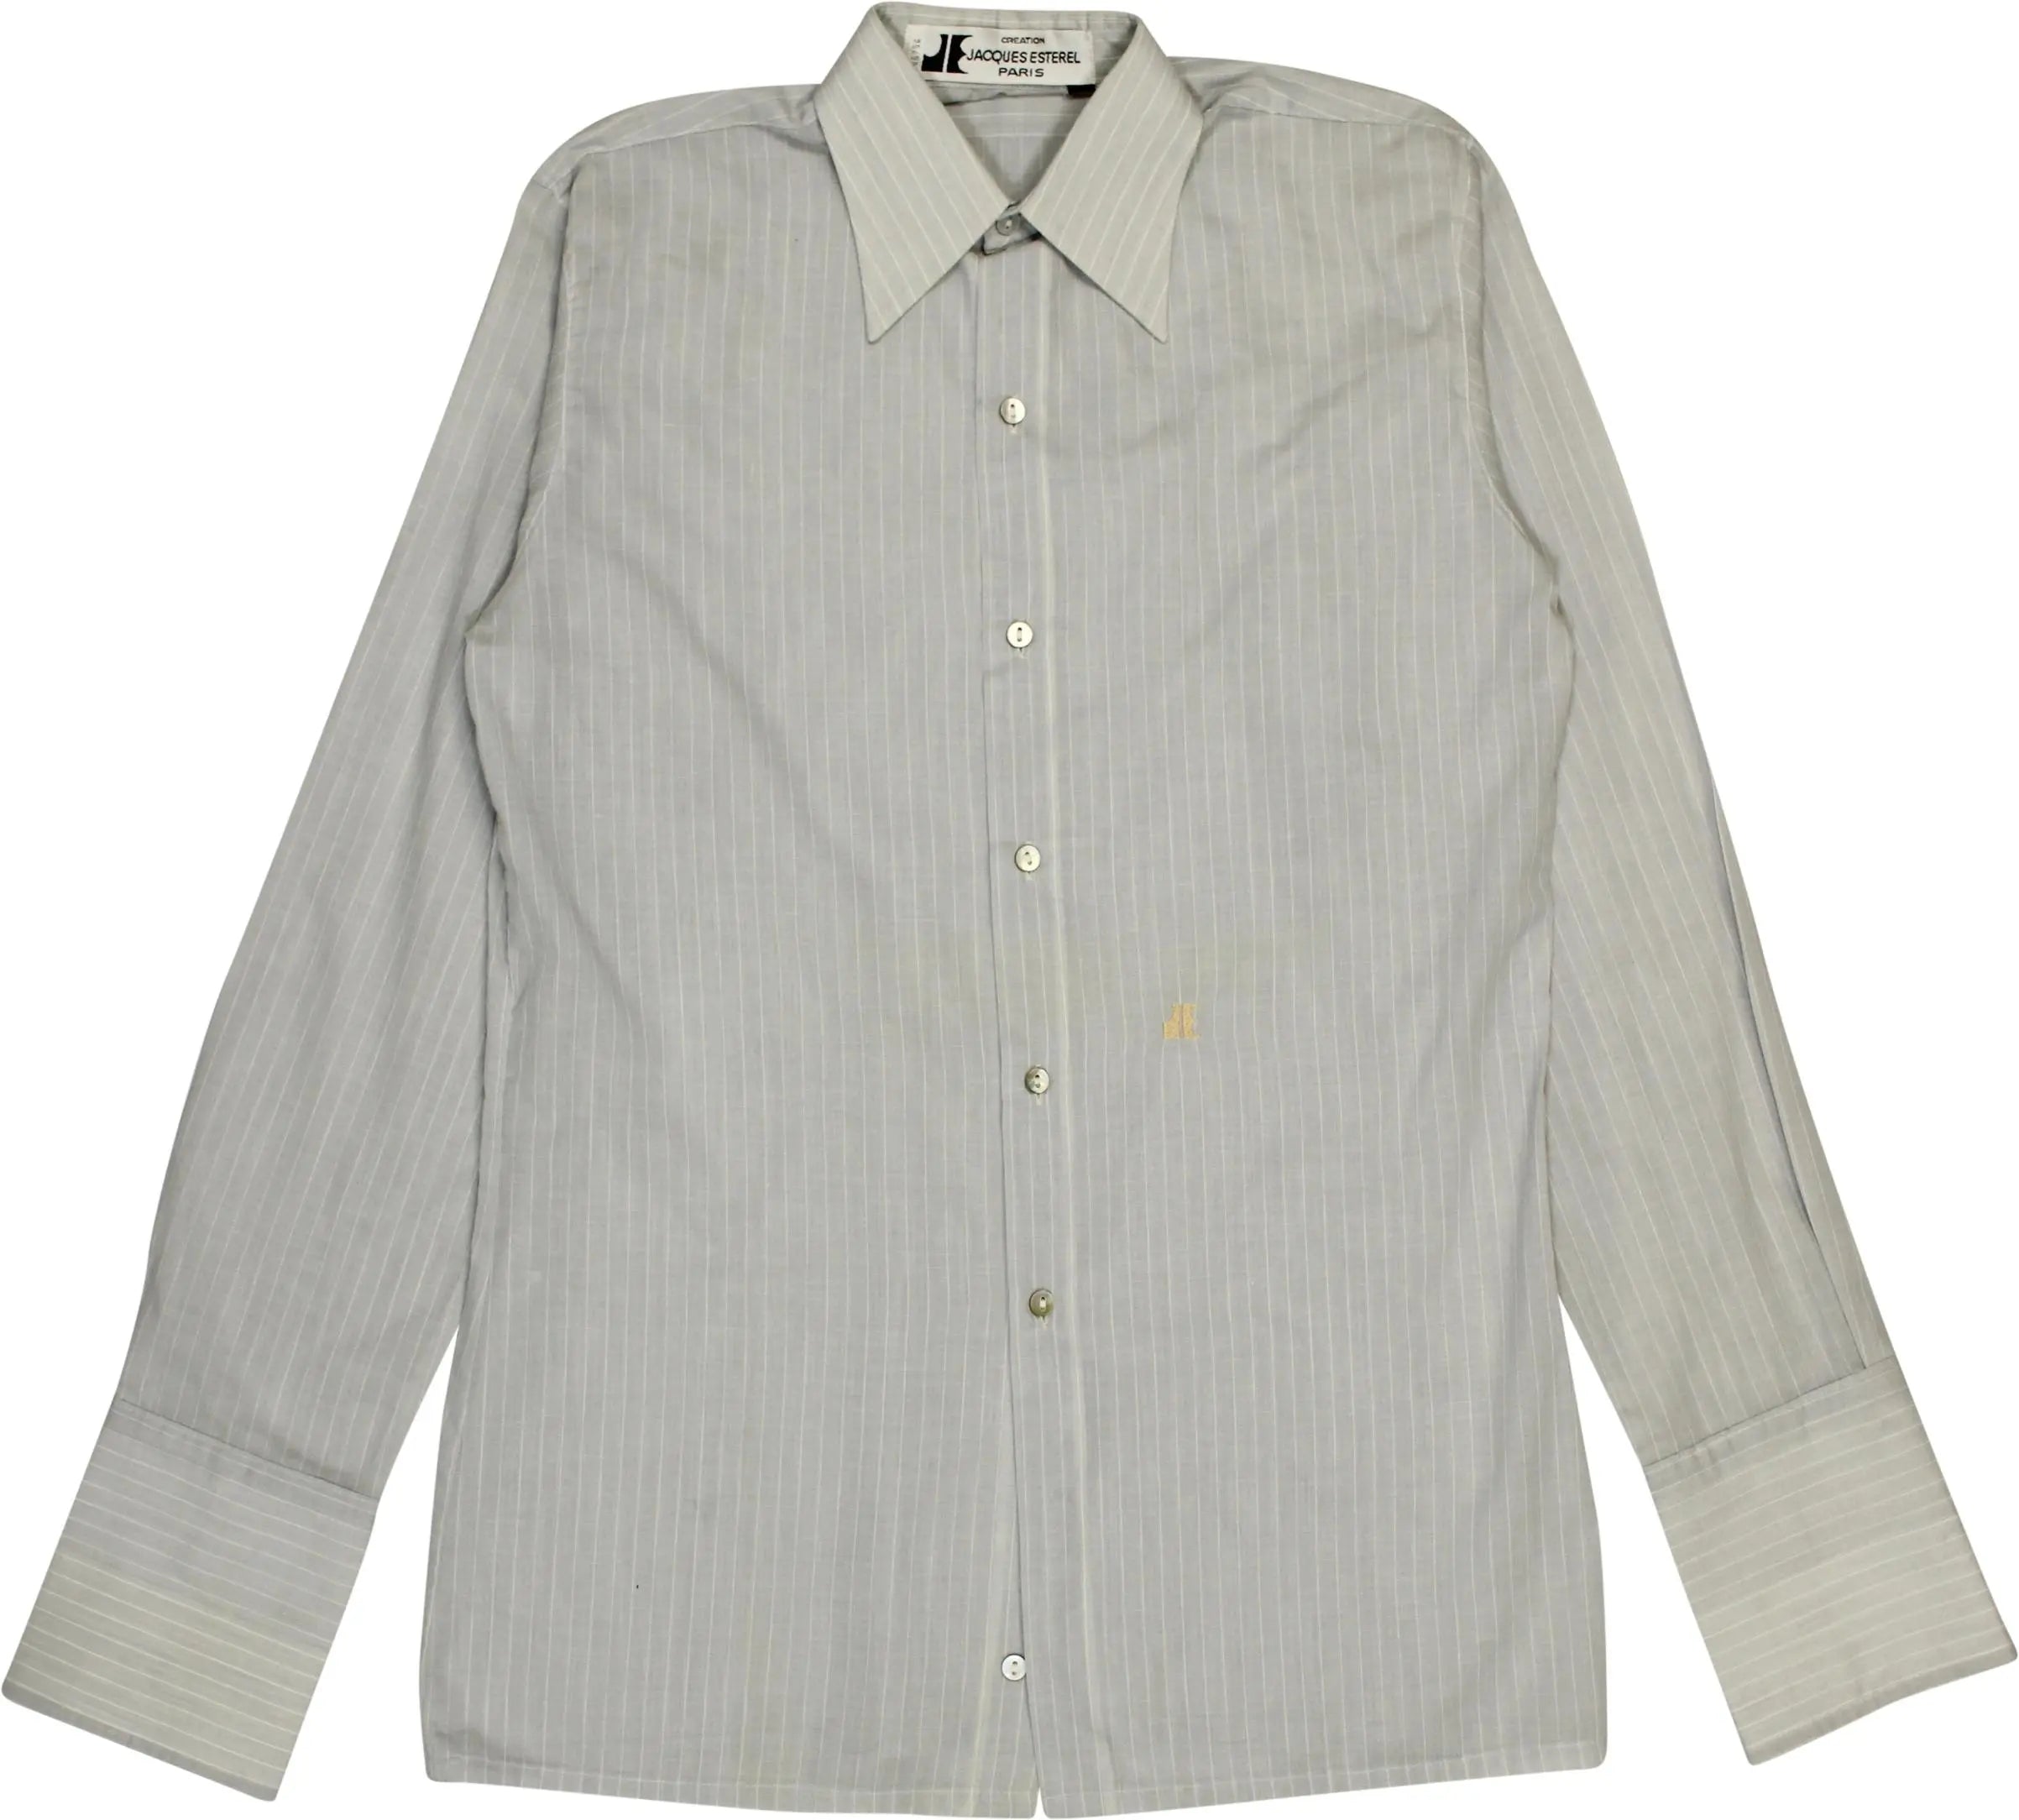 Jacques Esterel - Blue Striped Shirt- ThriftTale.com - Vintage and second handclothing